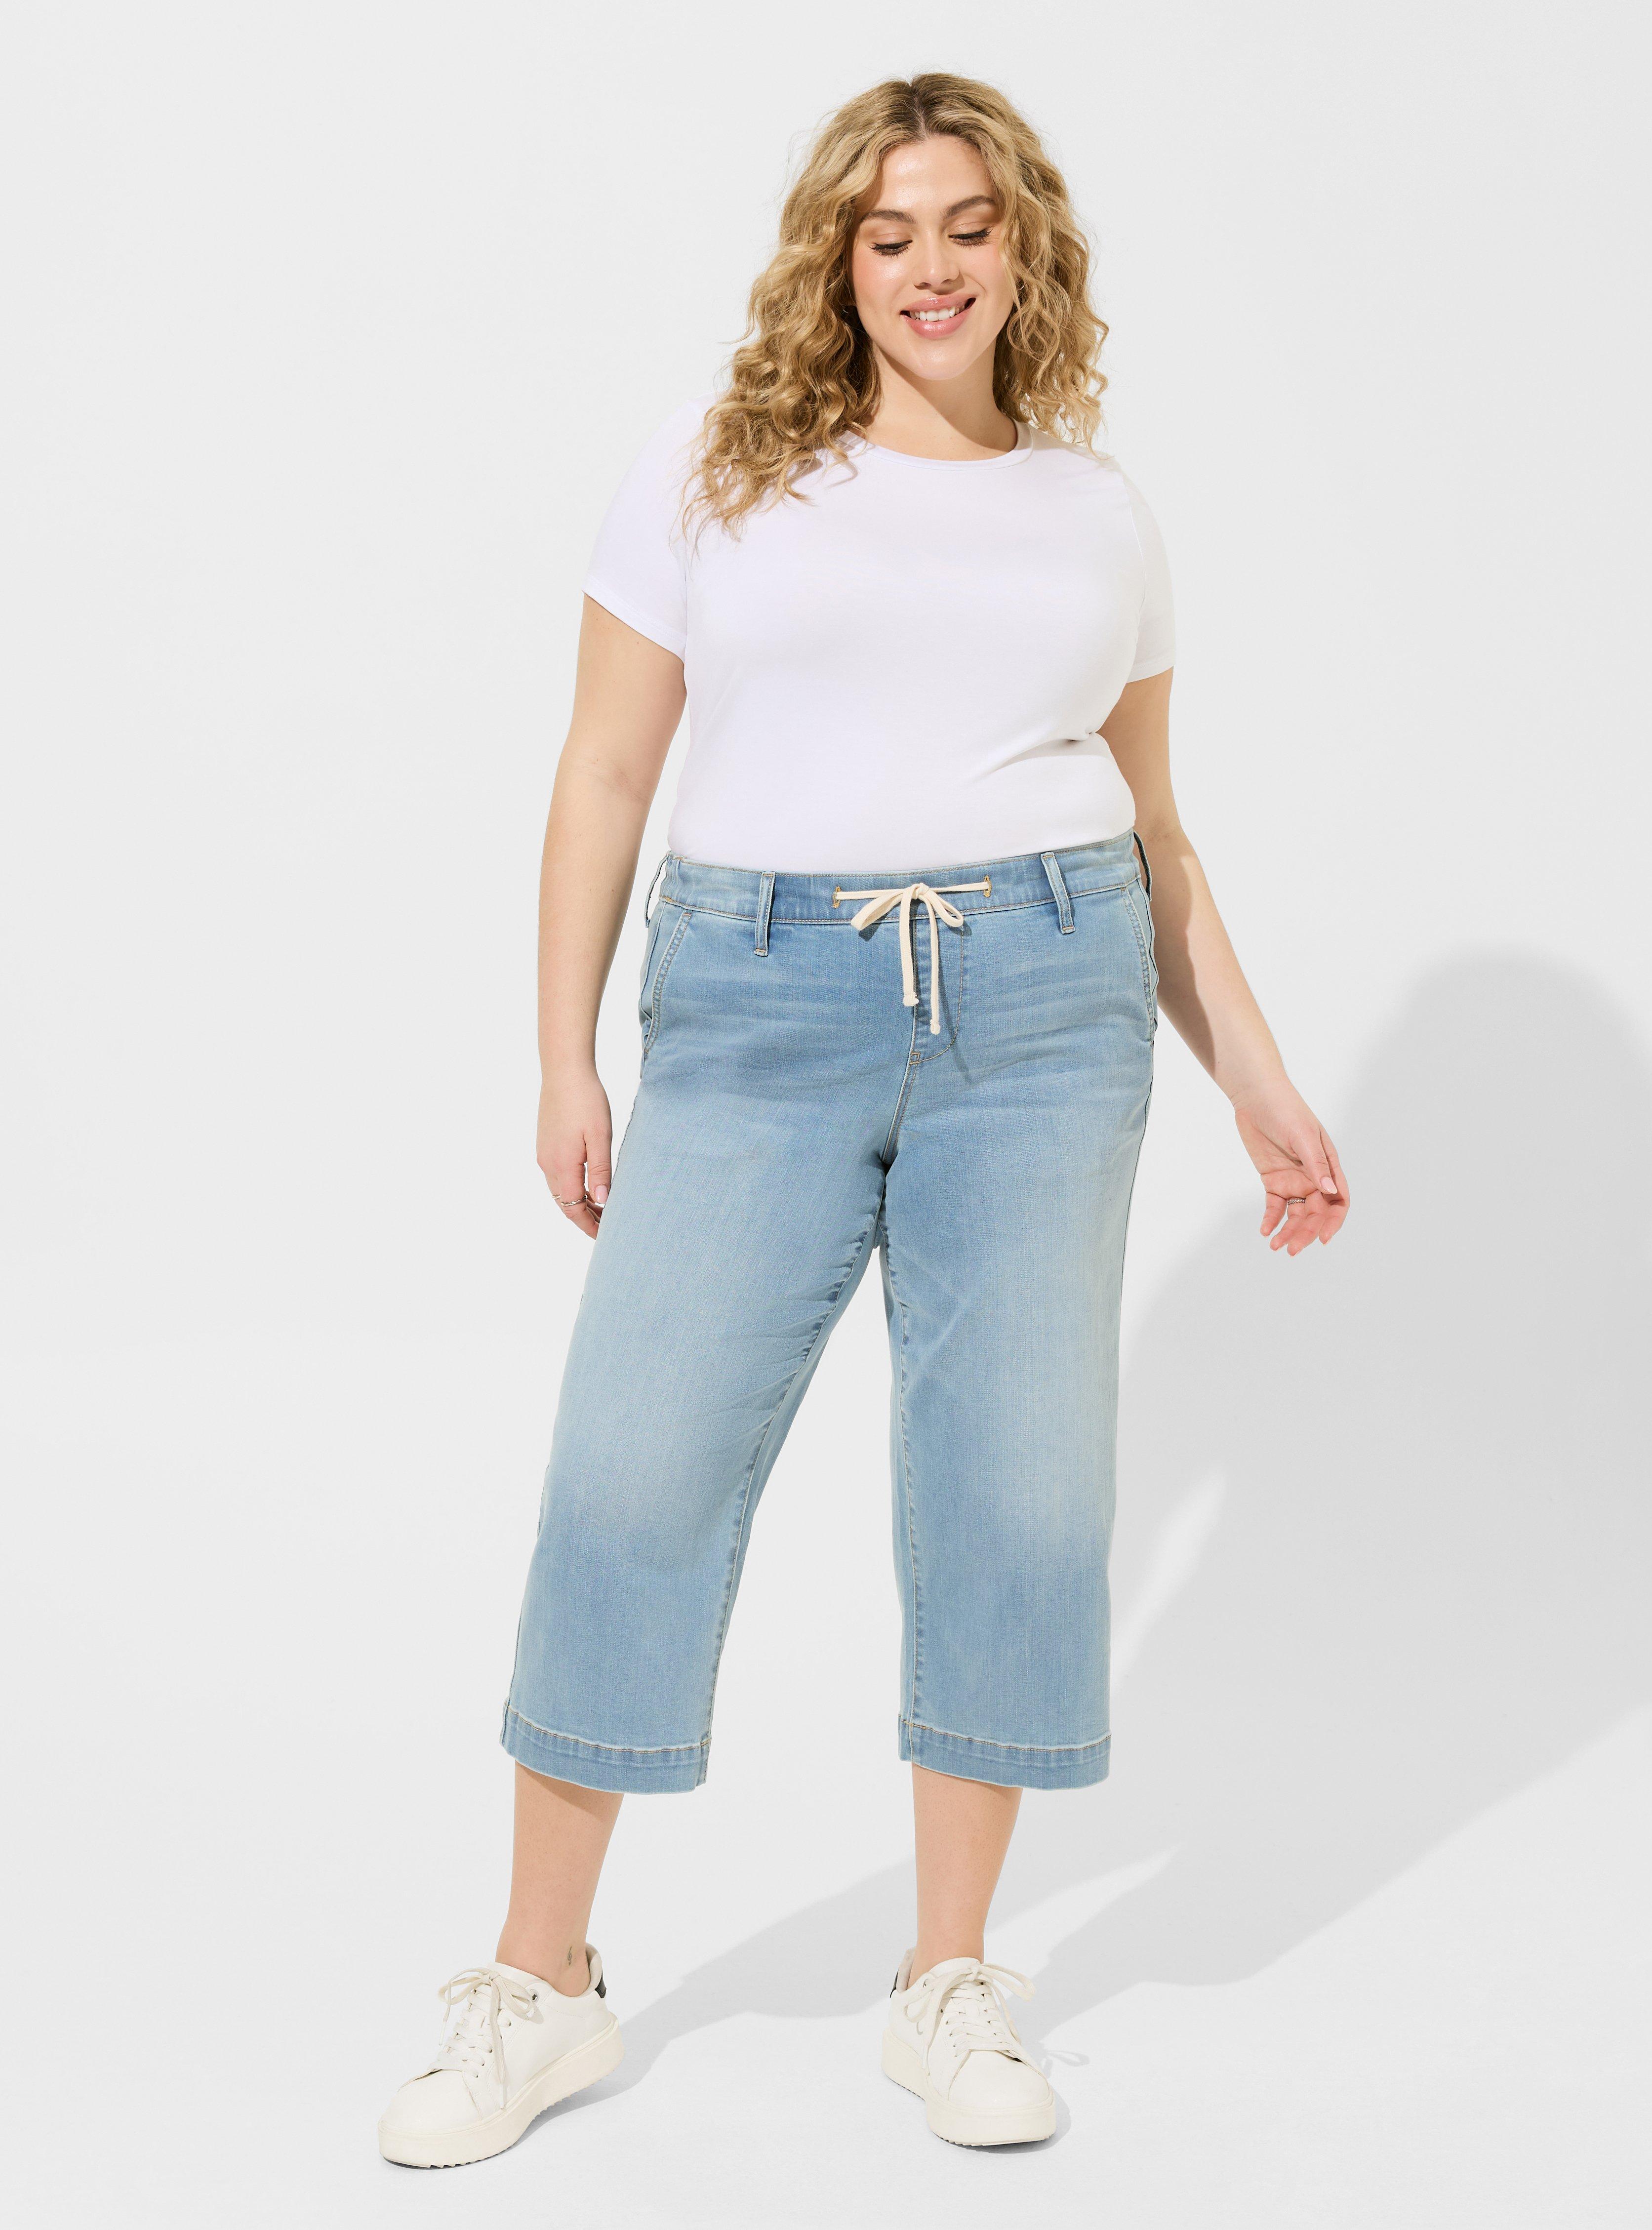 Dakota Johnson Shows How To Wear Autumn's Wide-Leg Jeans